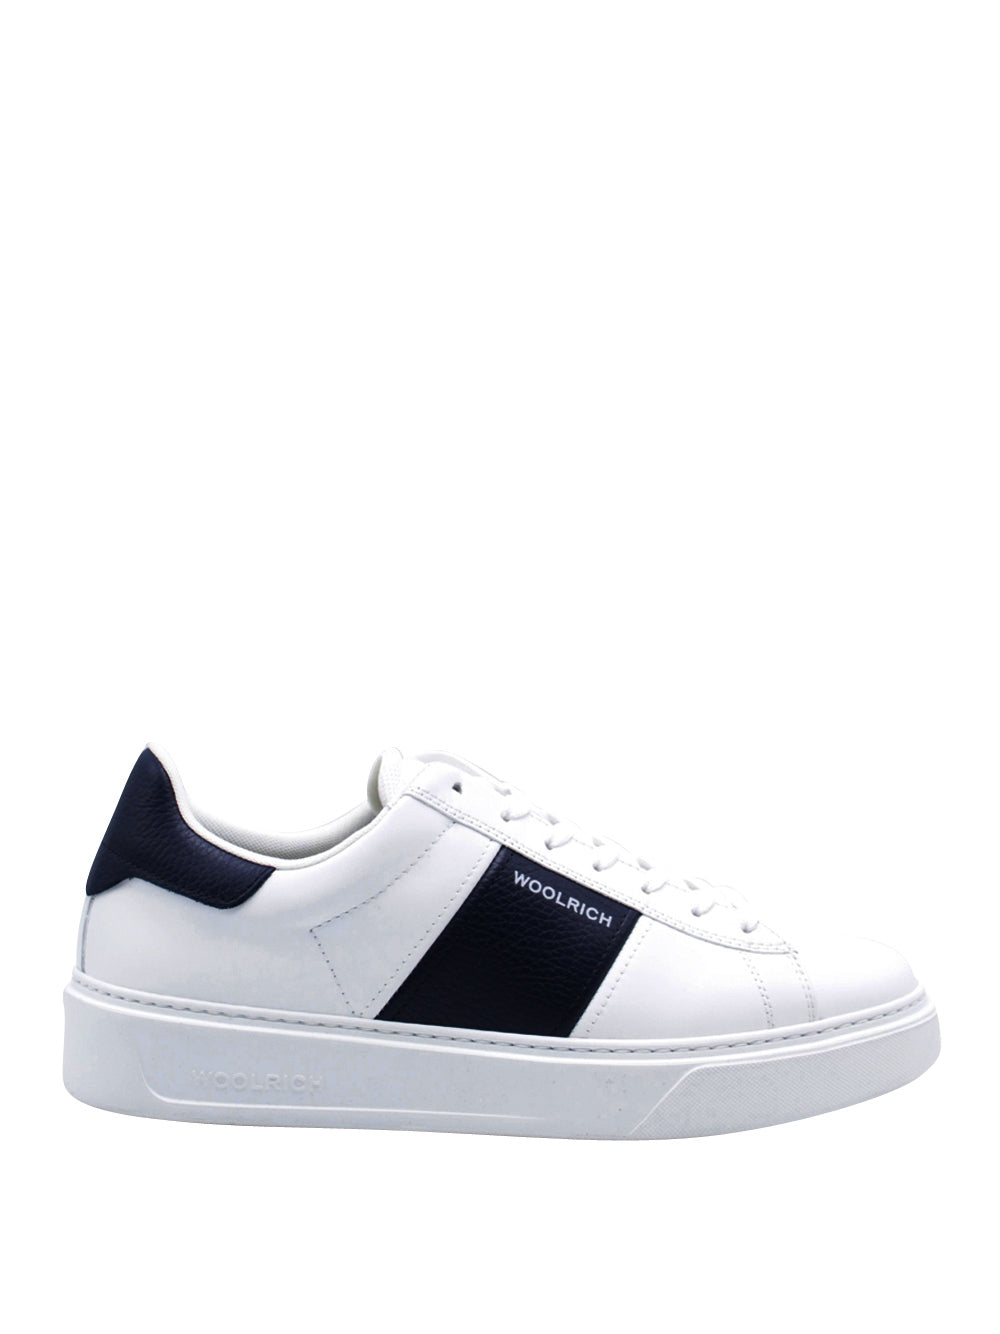 WOOLRICH Sneakers Uomo - Bianco modello WFM241.003